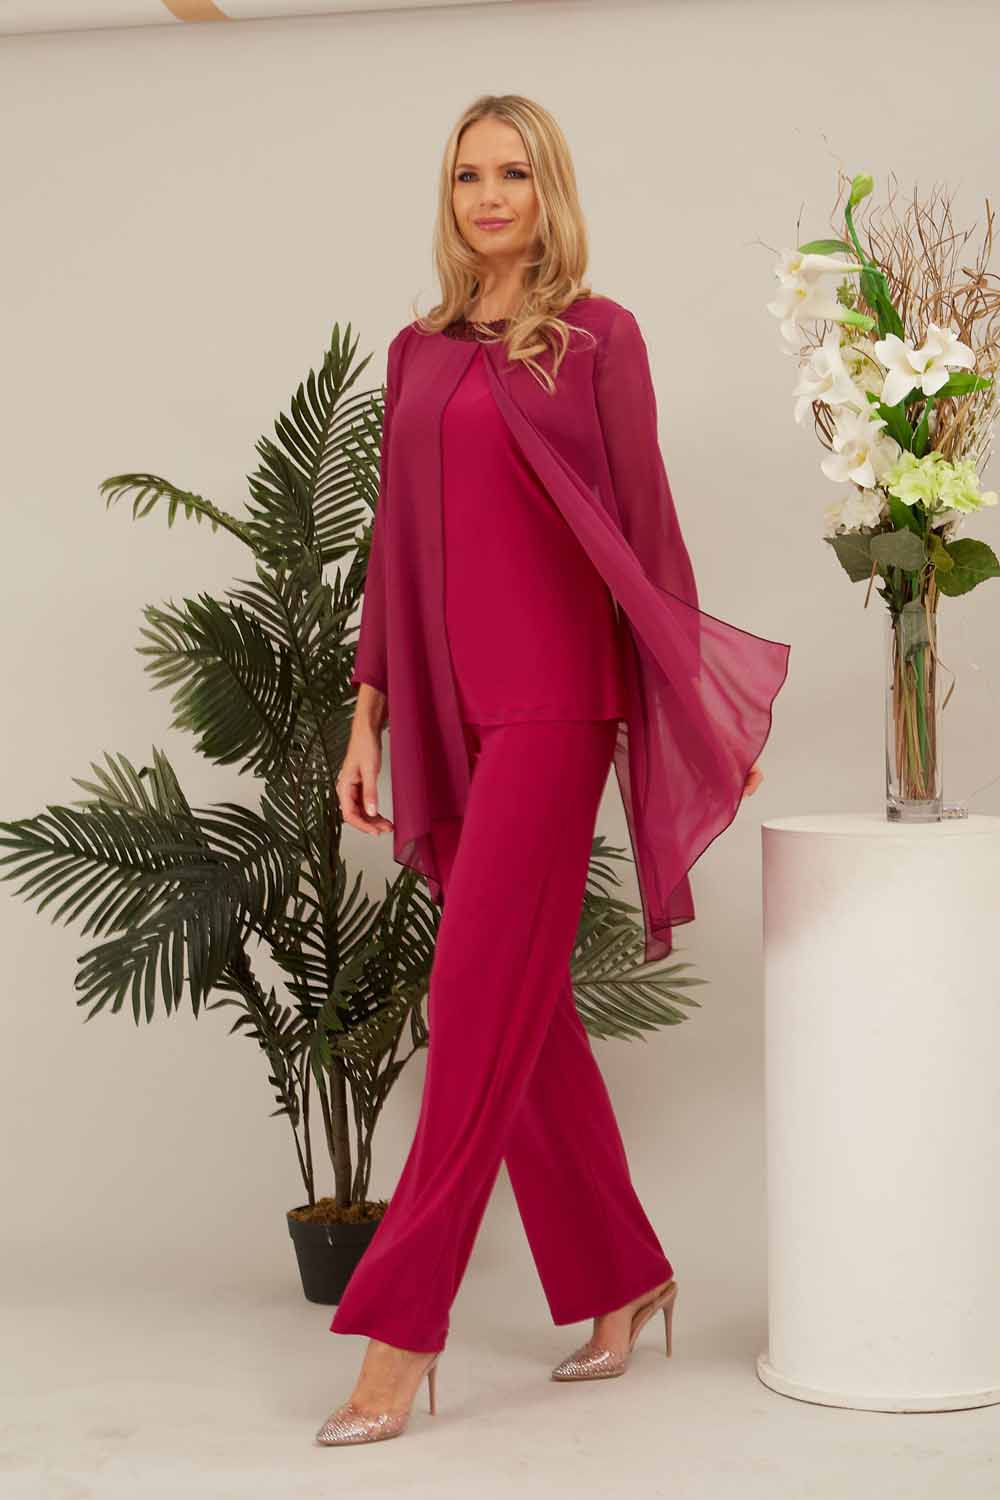 Lizabella Size 20 3 Piece Trouser Suit Mother Of The Bride | eBay